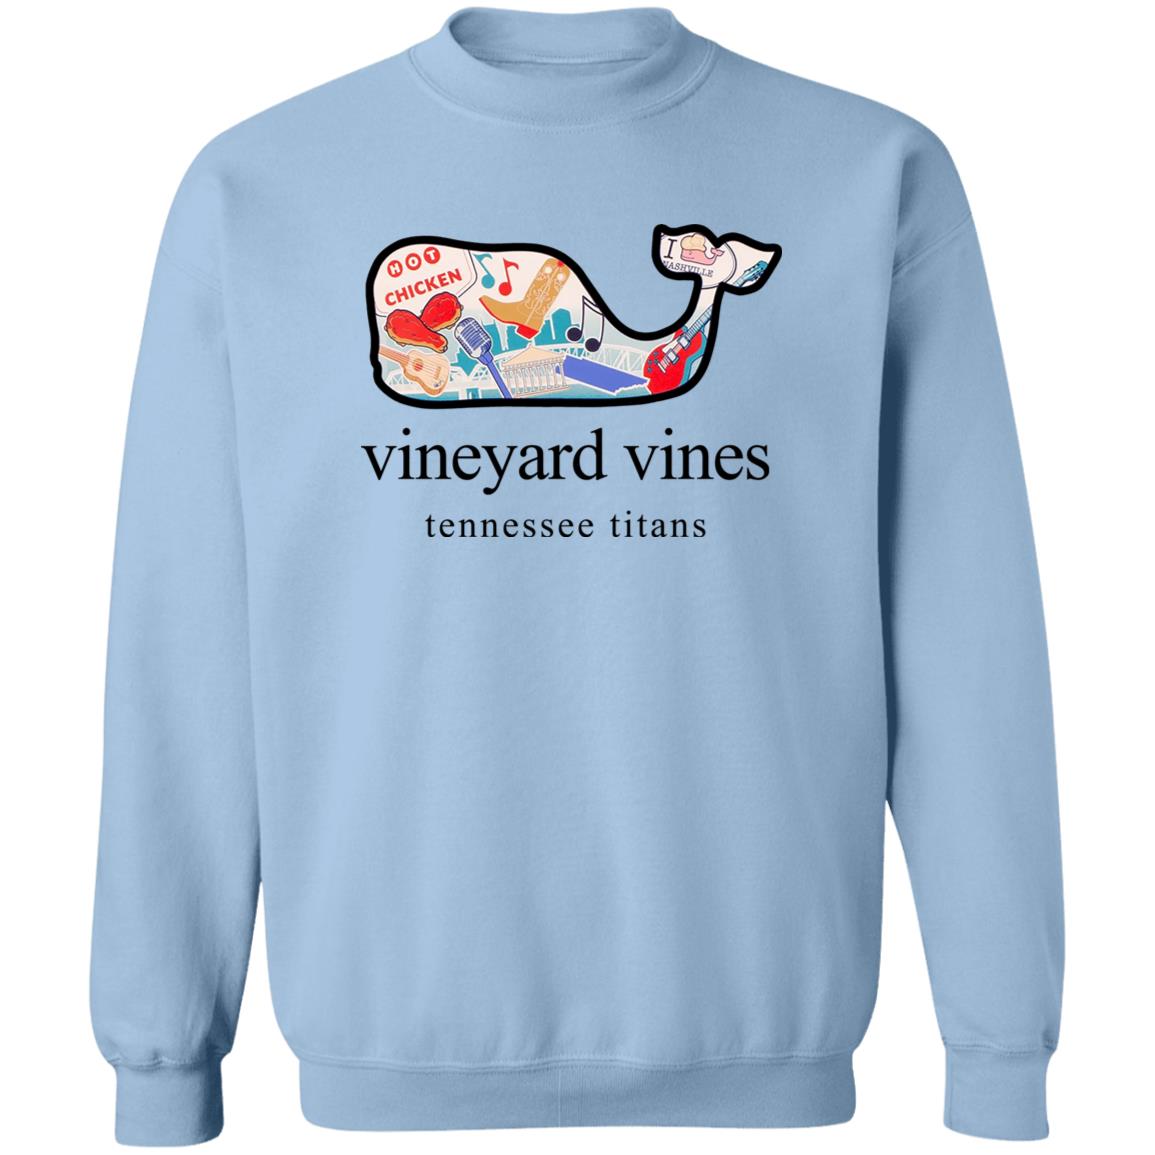 vineyard vines titans shirt